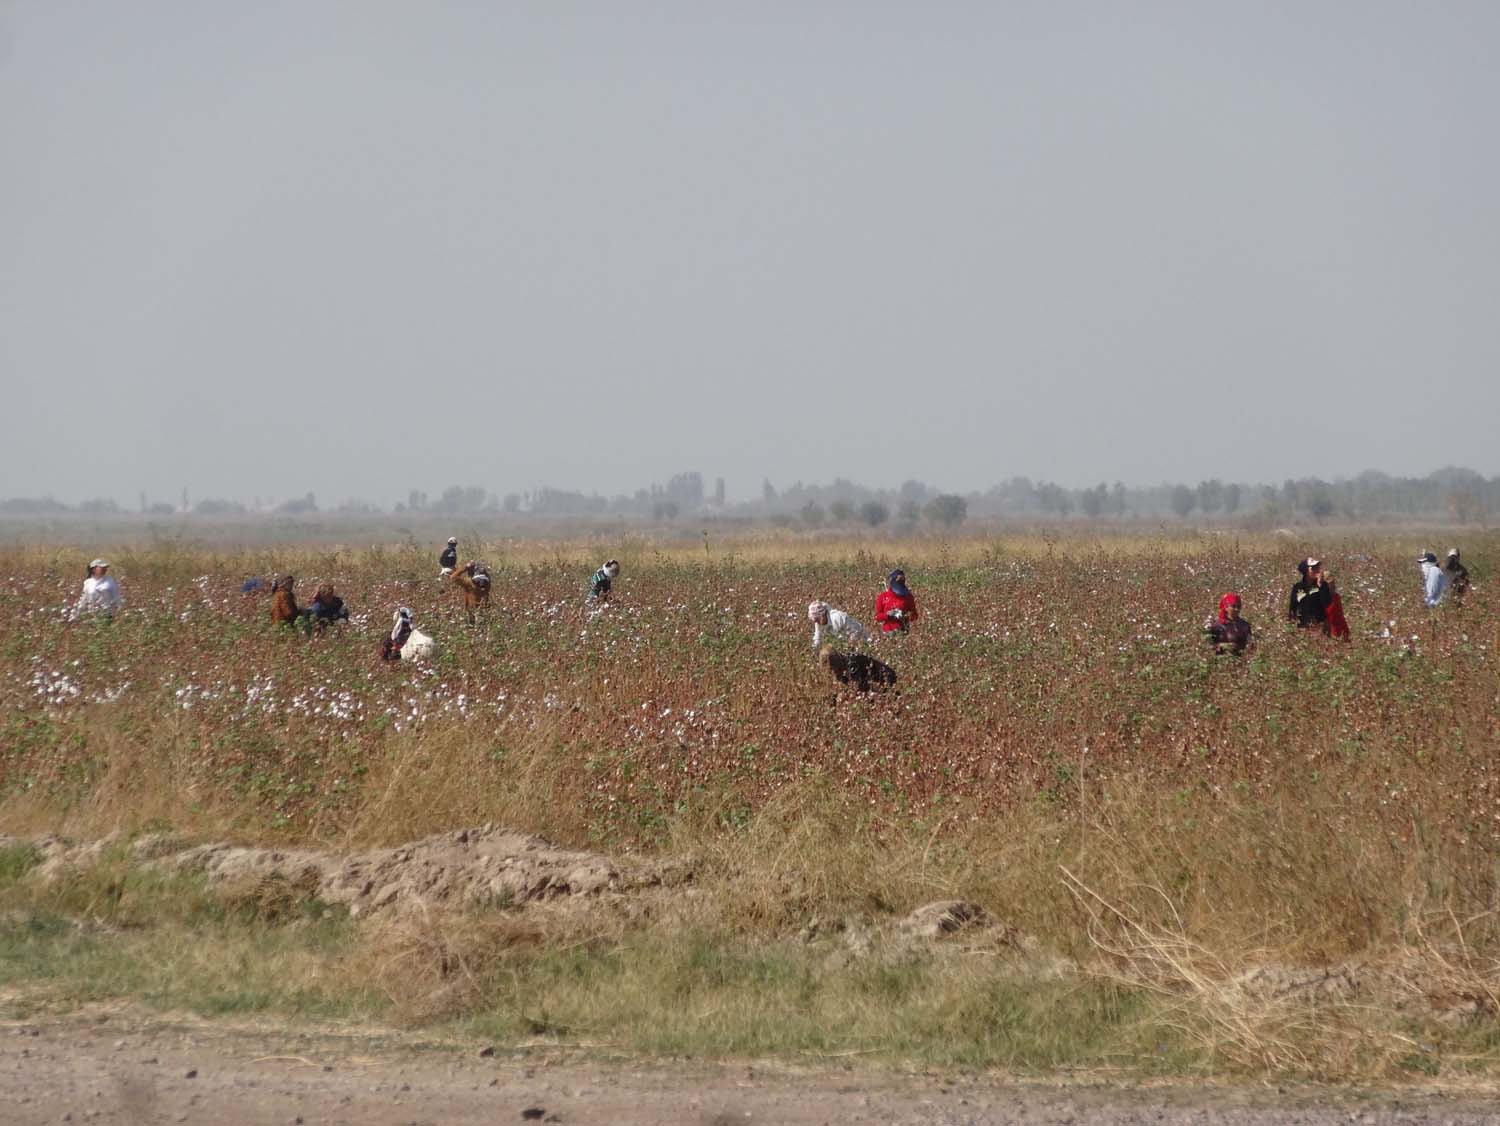 cotton pickers hard at work to reach their qouta